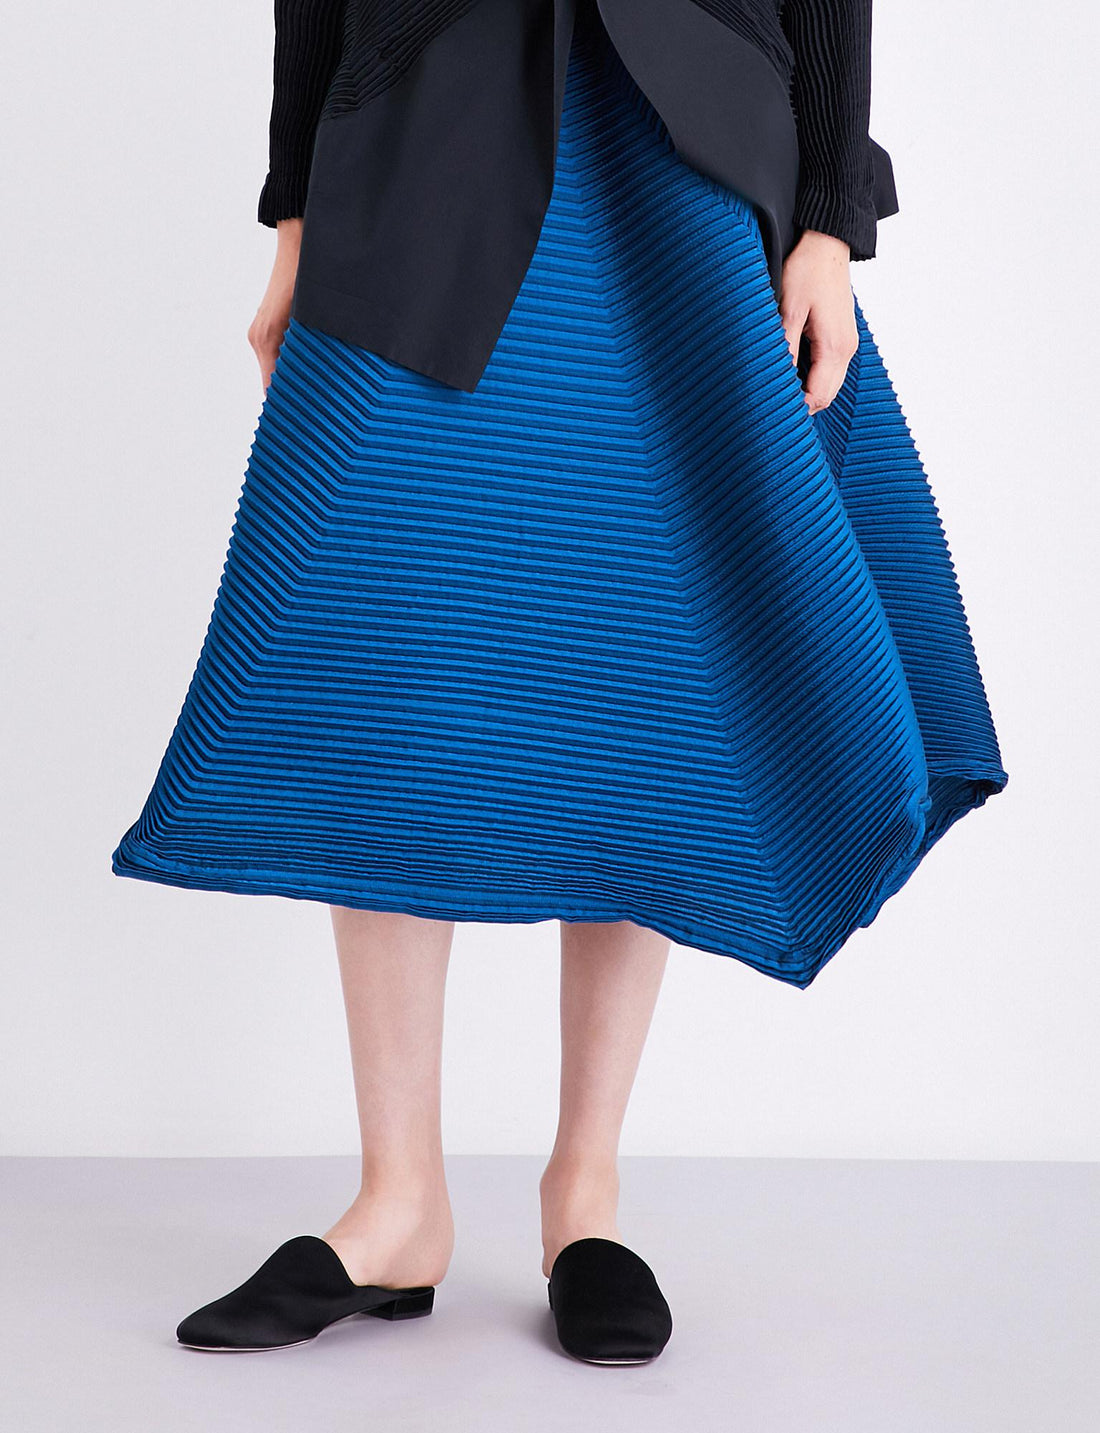 Issey Miyake Blue Polygon Pleat Architectural Avant Garde Skirt - S / M